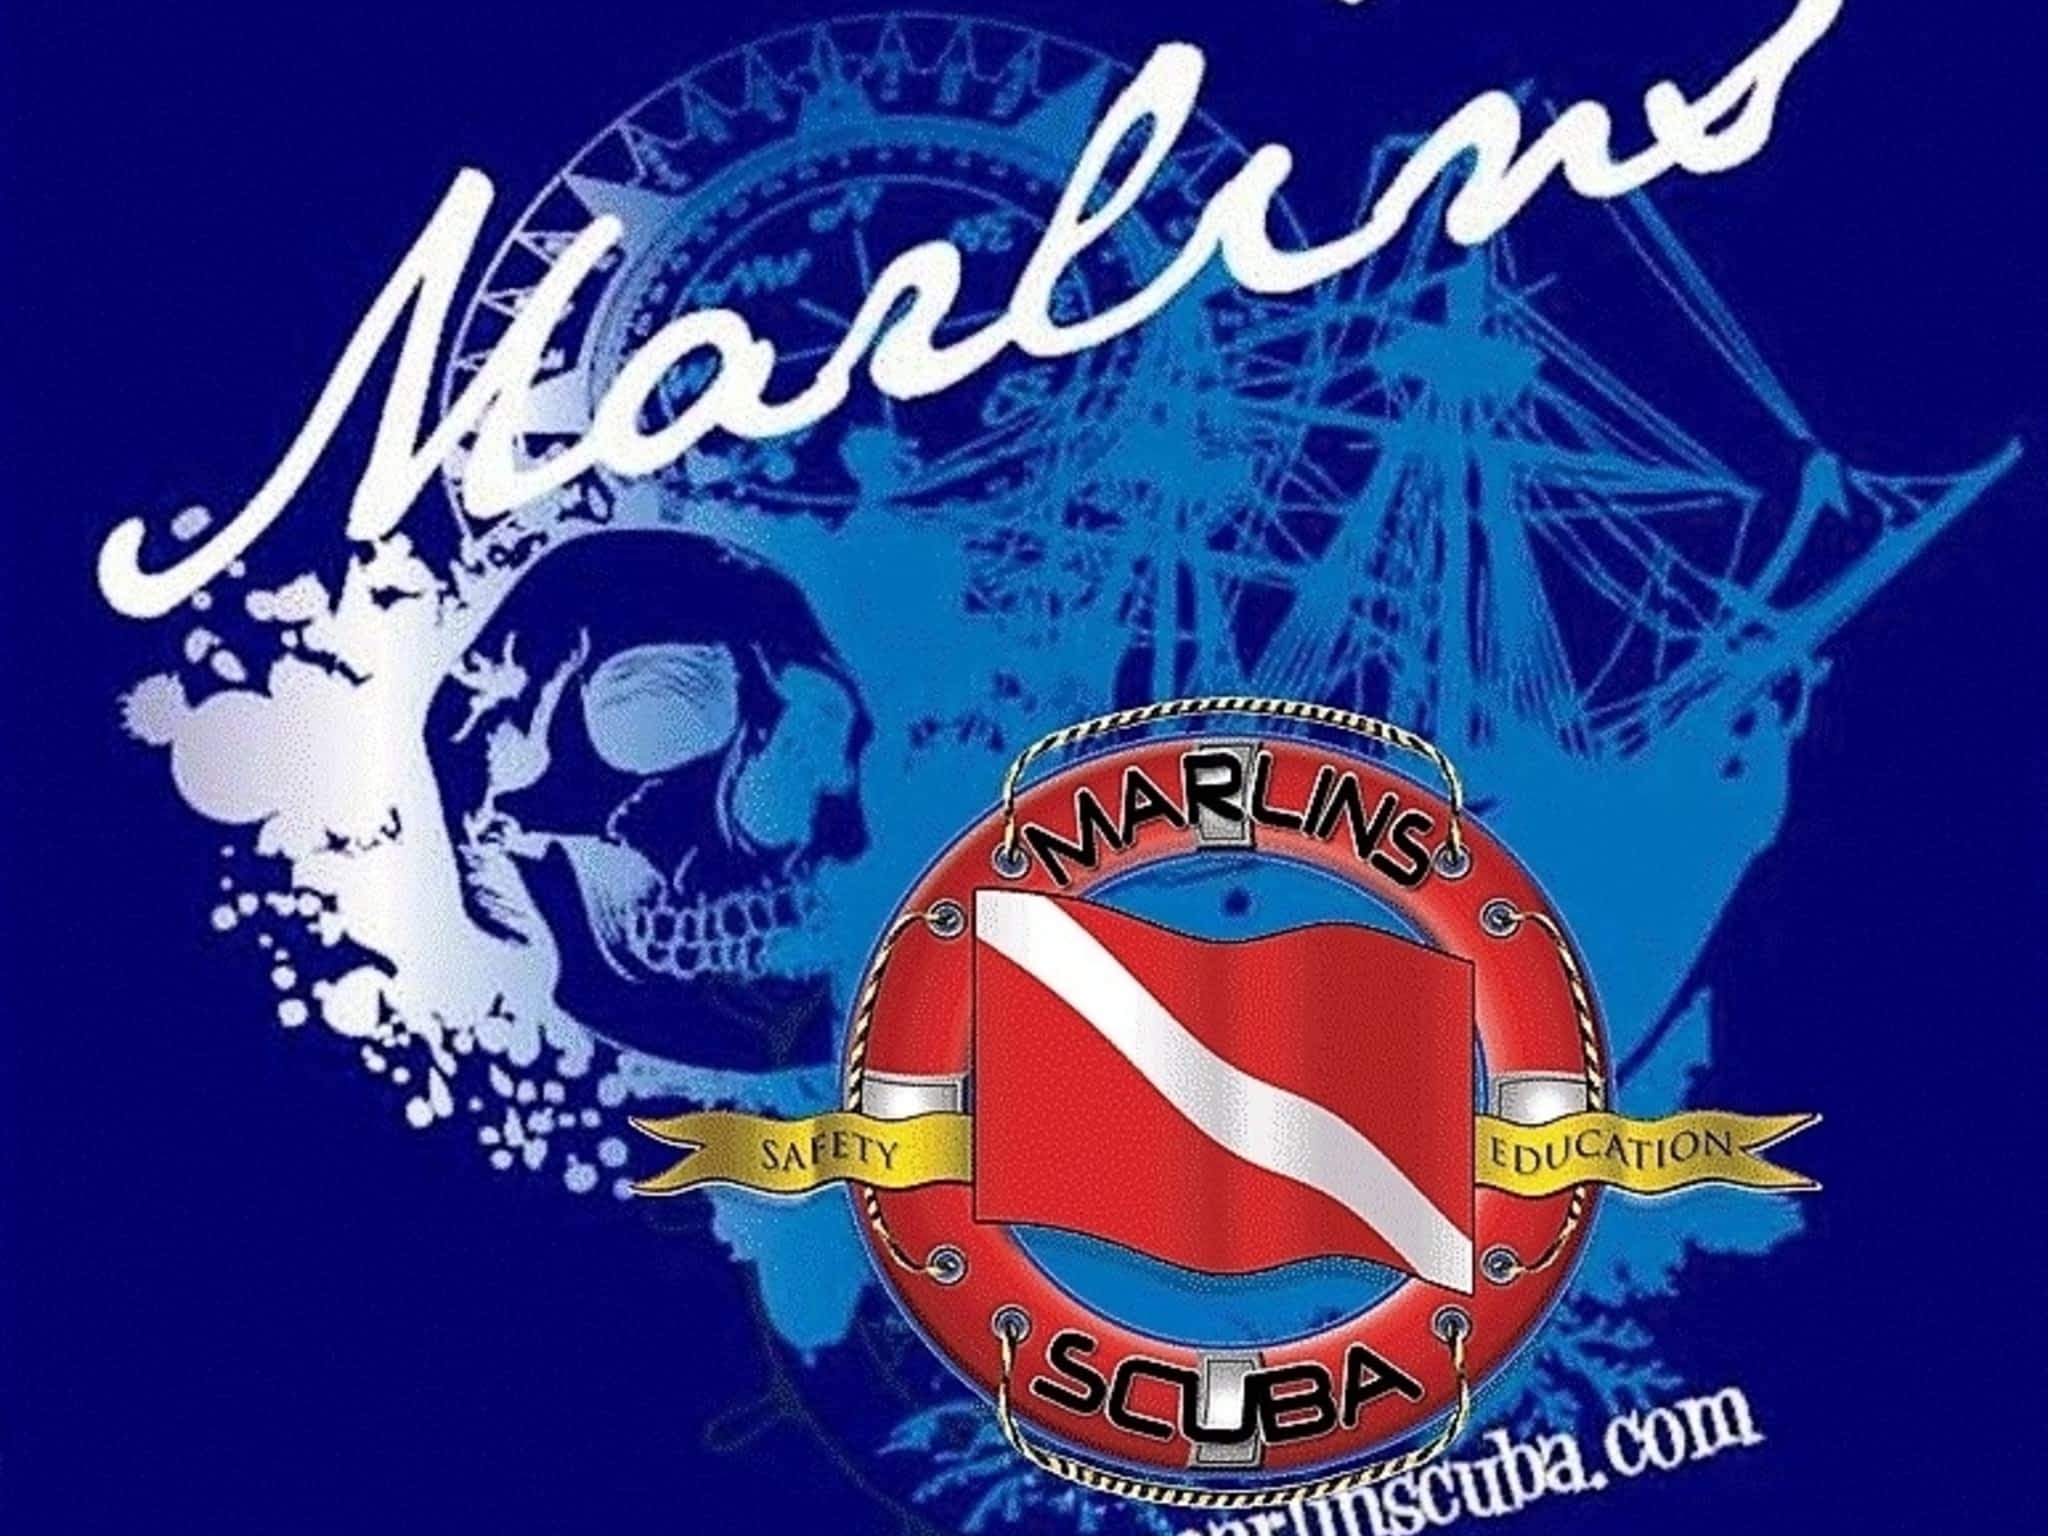 photo Marlin's Scuba Inc